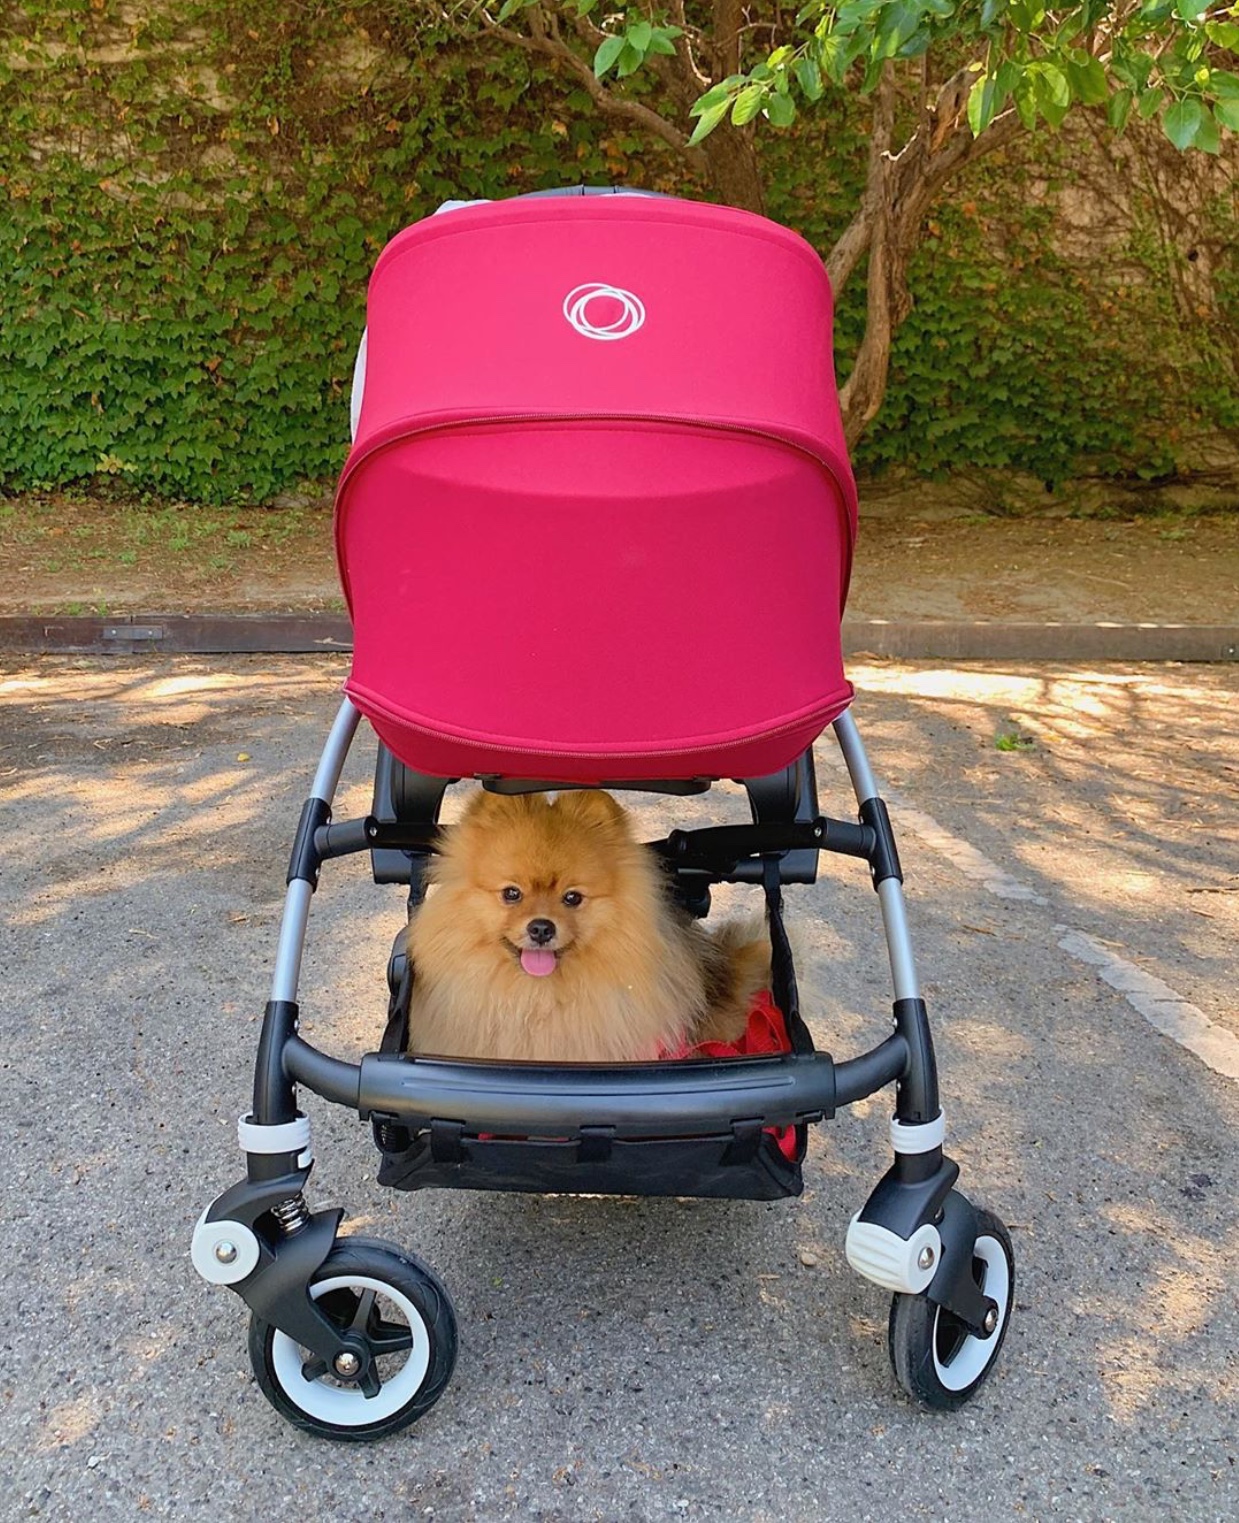 Pomeranian below a baby stroller outdoors